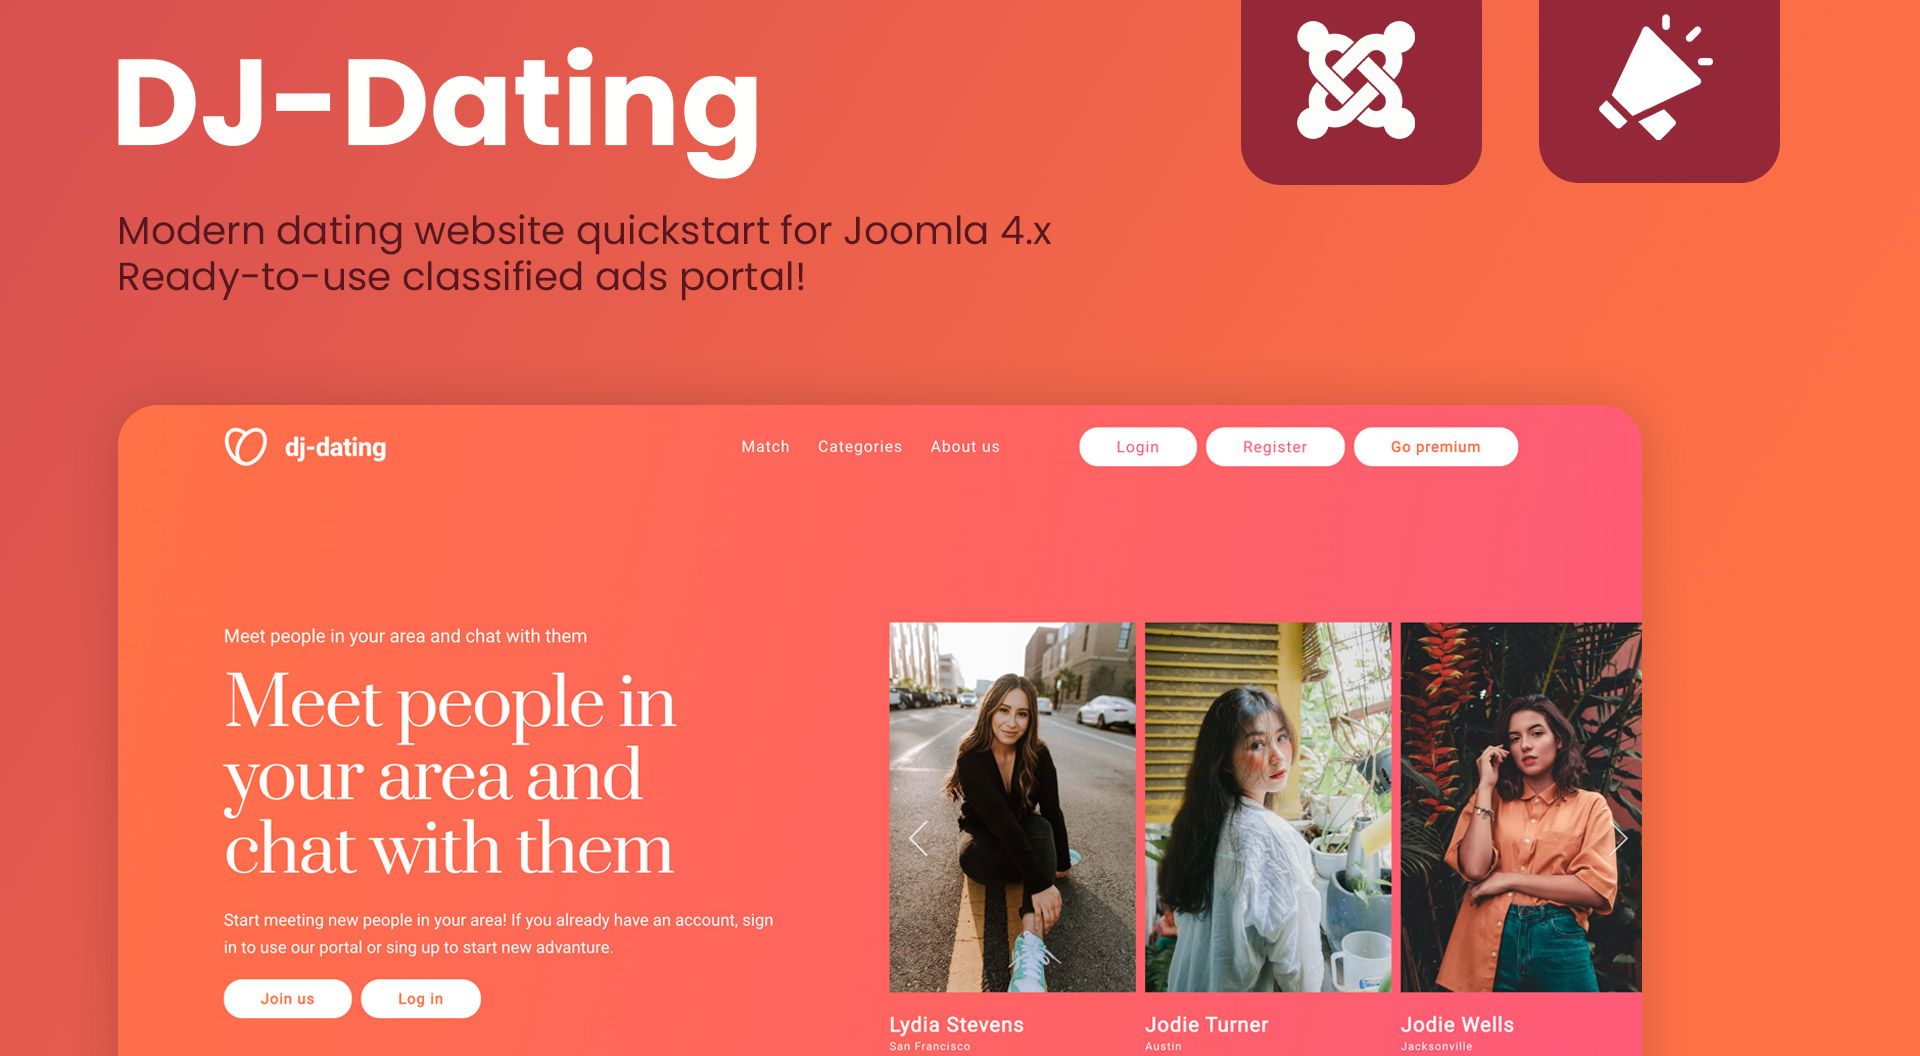 DJ-Dating - new Joomla 4.x website quickstart release for classified ads portals